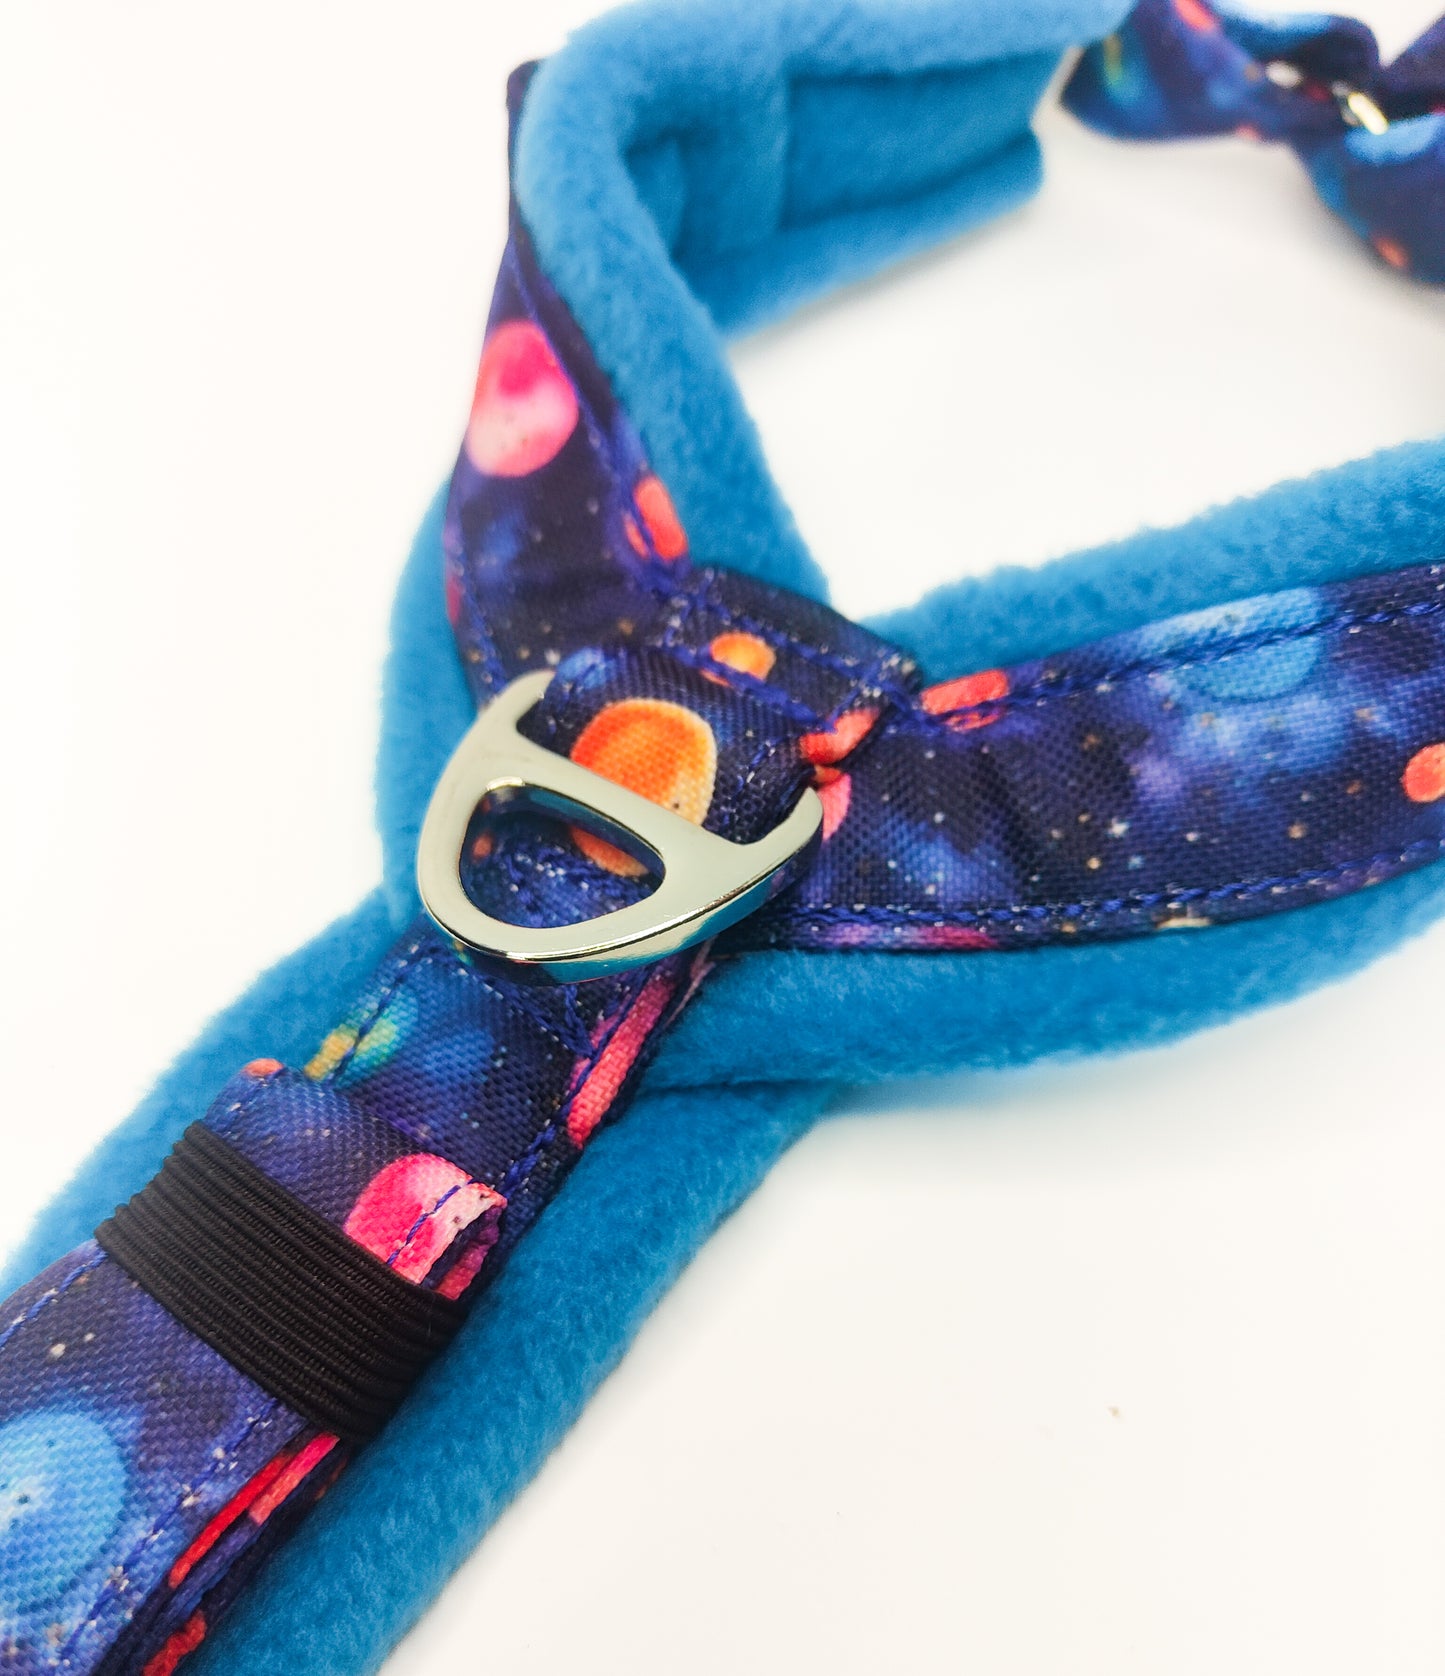 Lost In Space - Adjustable Vari-Fit harness